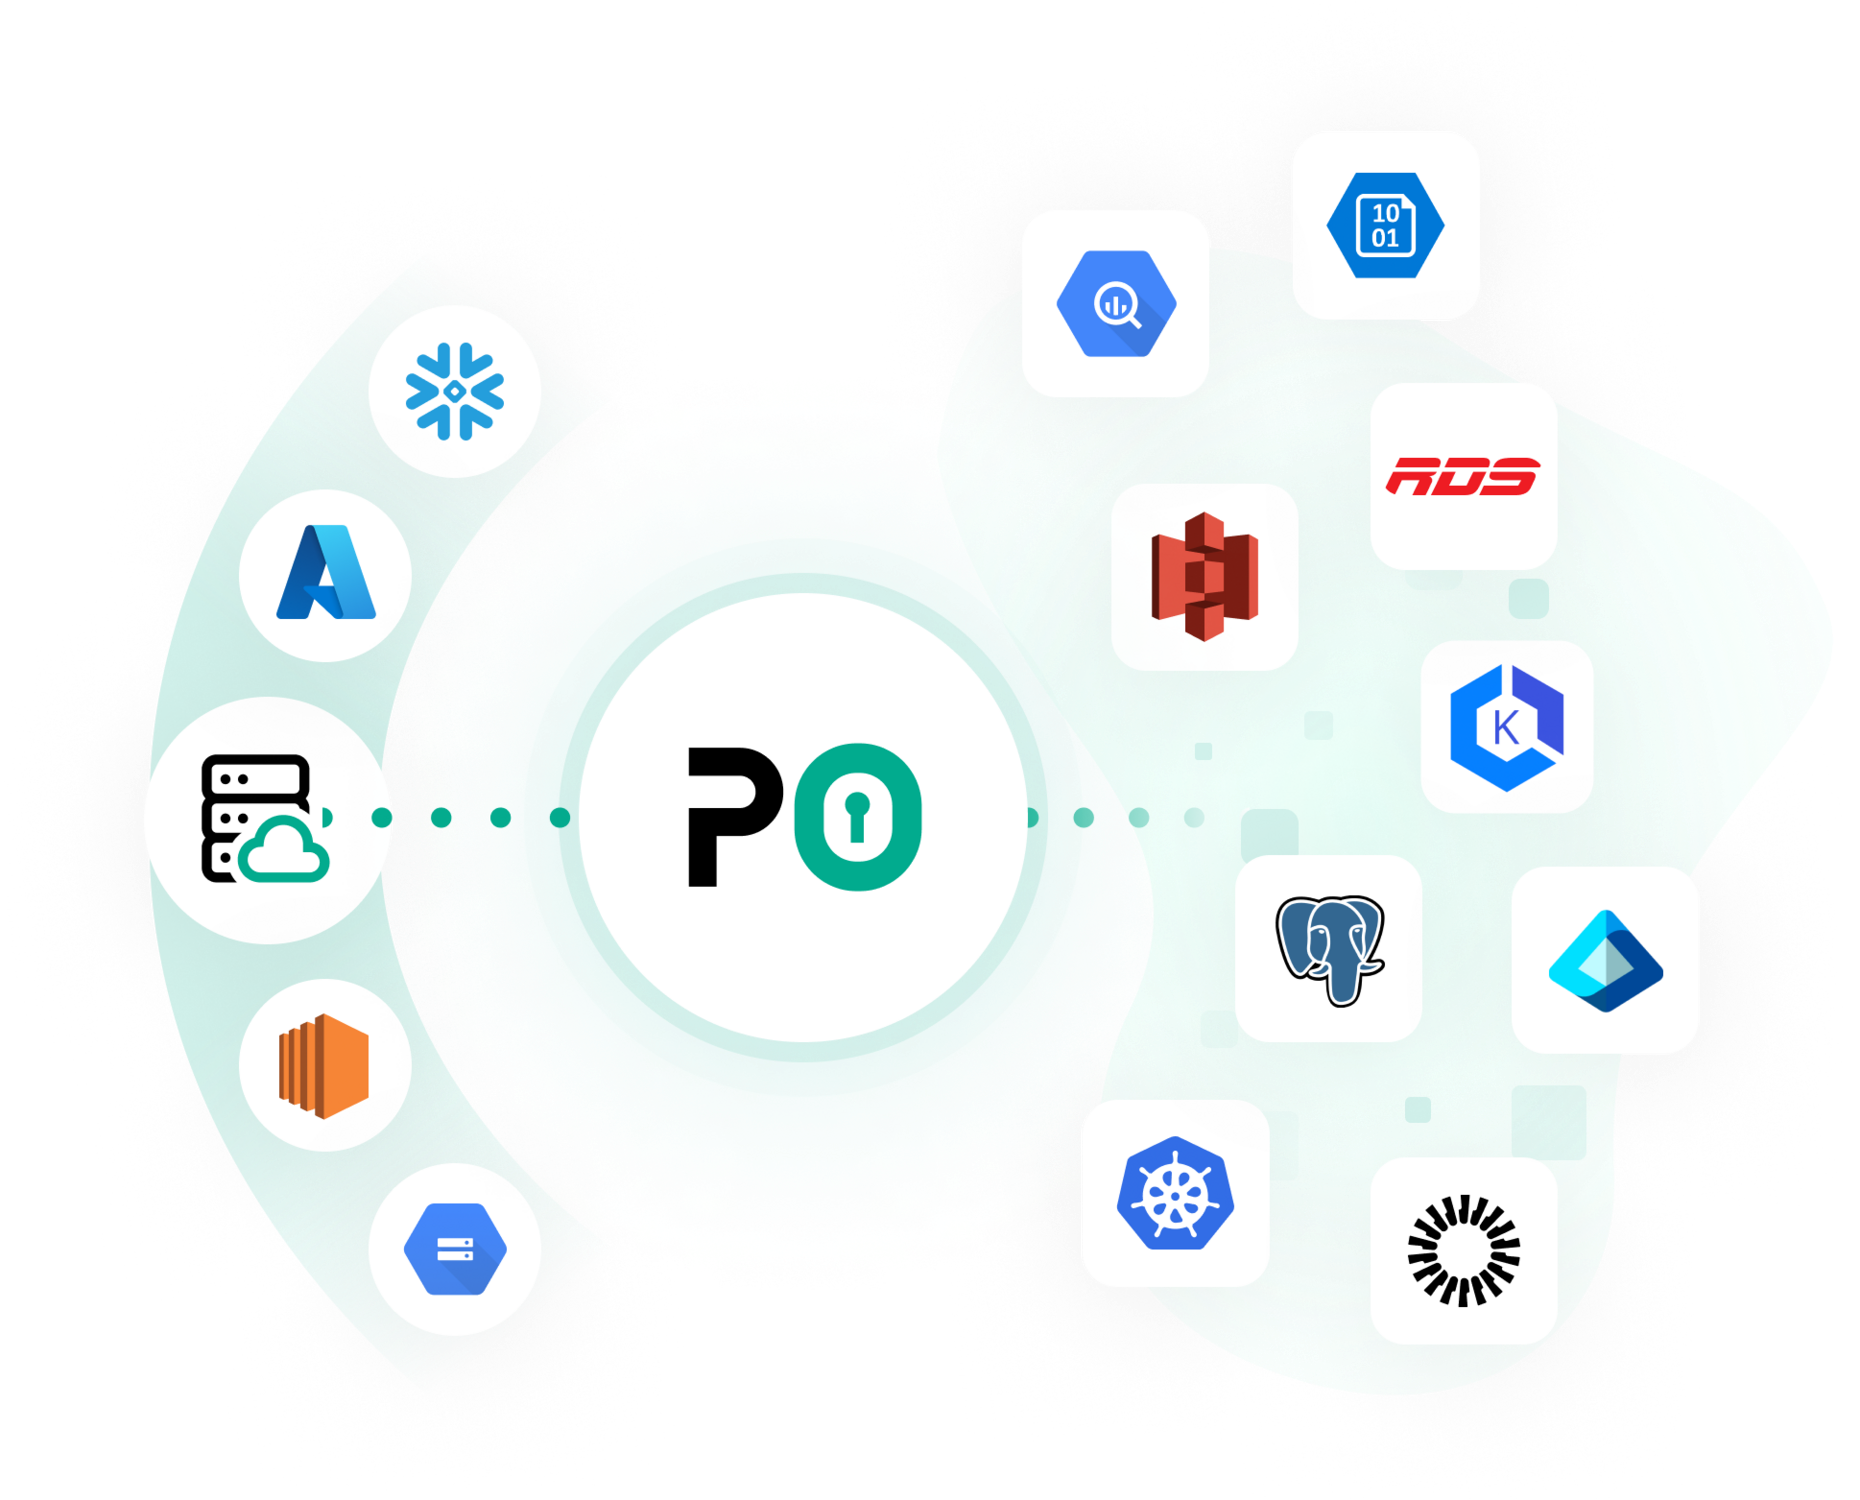 An illustration of some of P0's integrations: AWS, Google Cloud, Kubernetes, PostgreSQL, Entra ID, Workspace, and Okta.